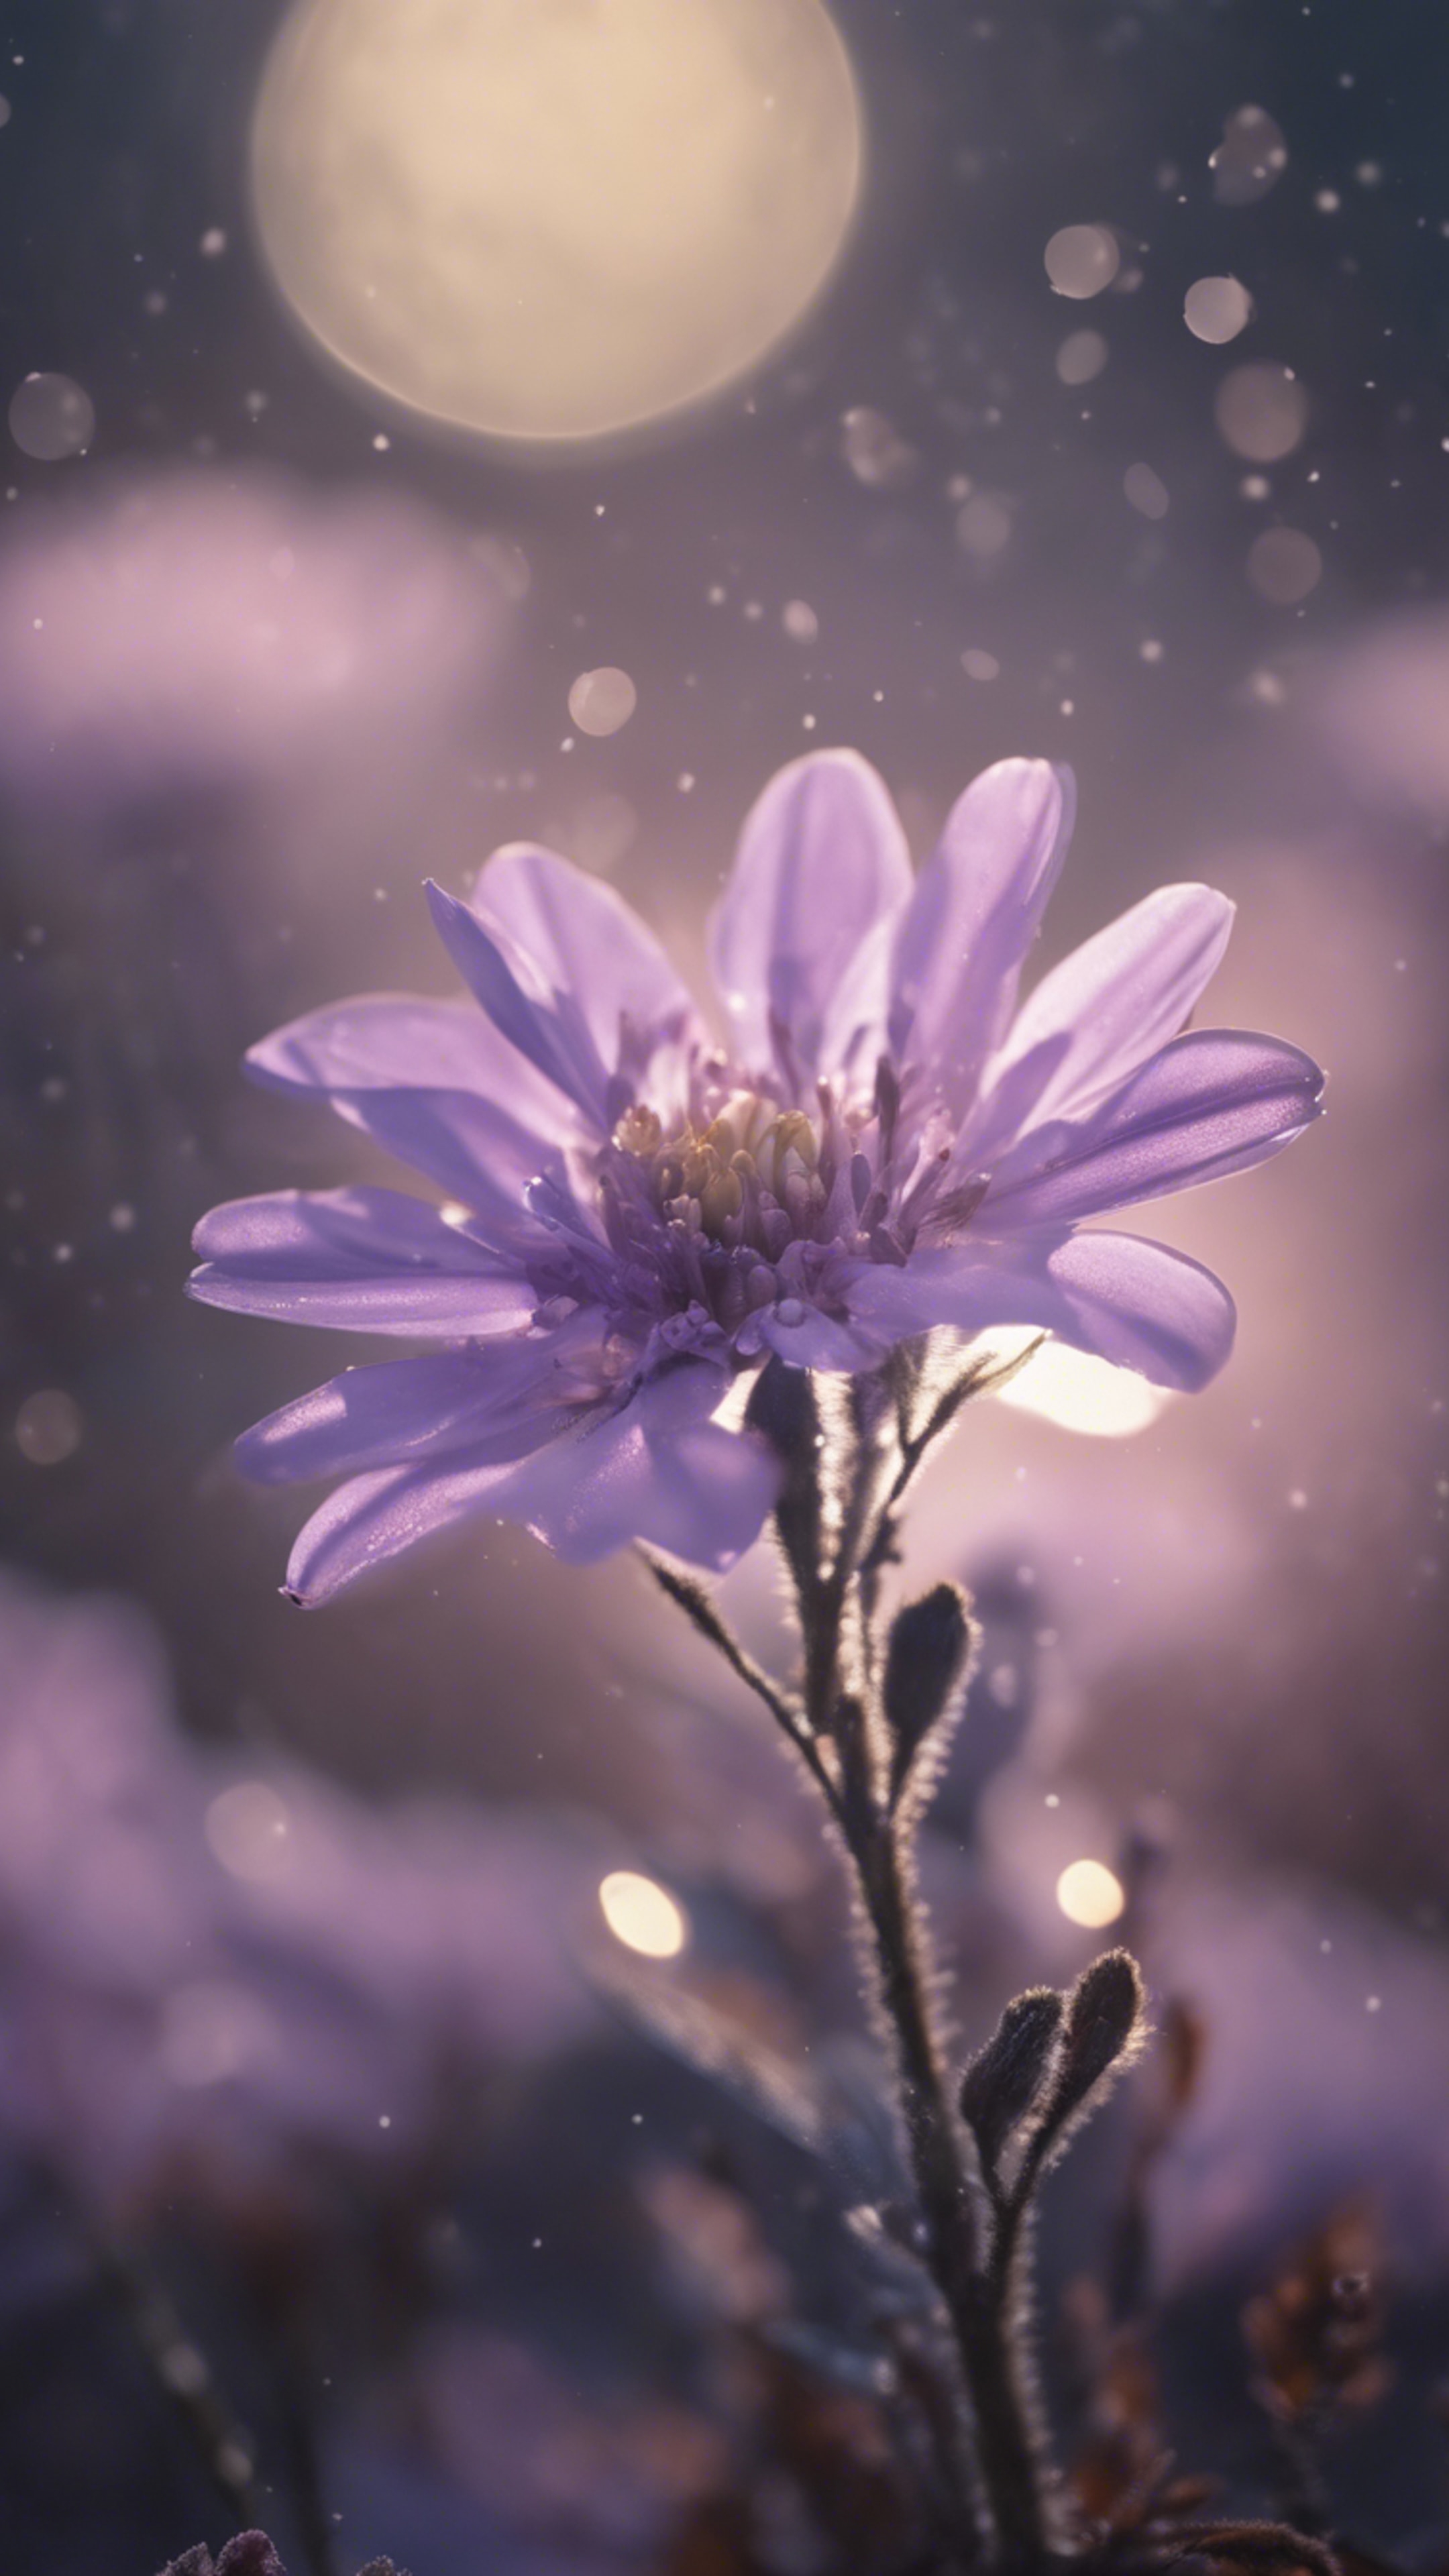 A light purple flower blooms under the soft glow of moonlight.壁紙[d3ee88b9afa845898b5b]